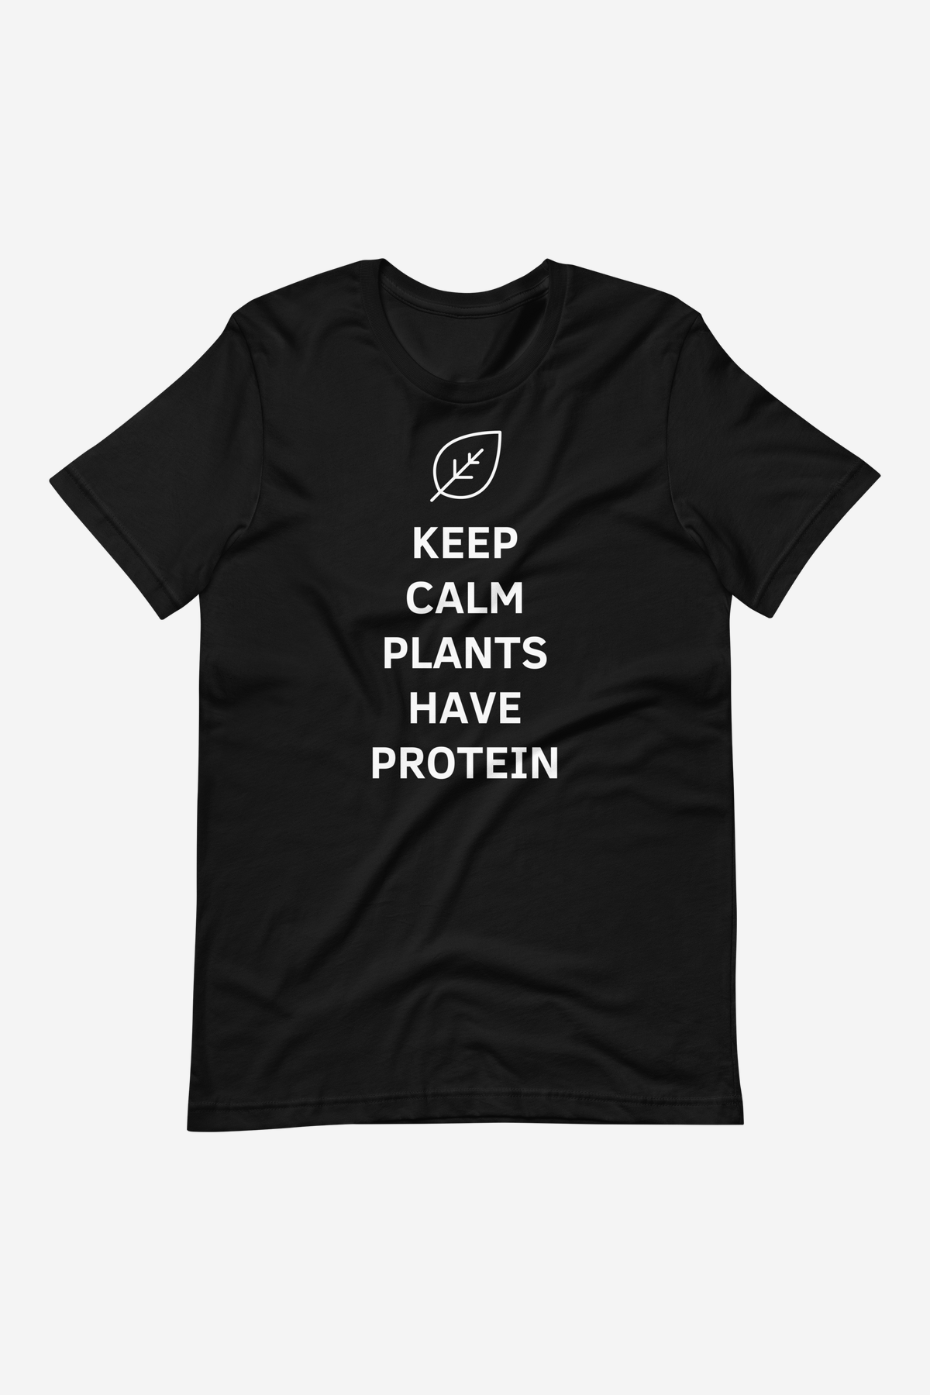 Keep Calm -  Unisex vegan t-shirt